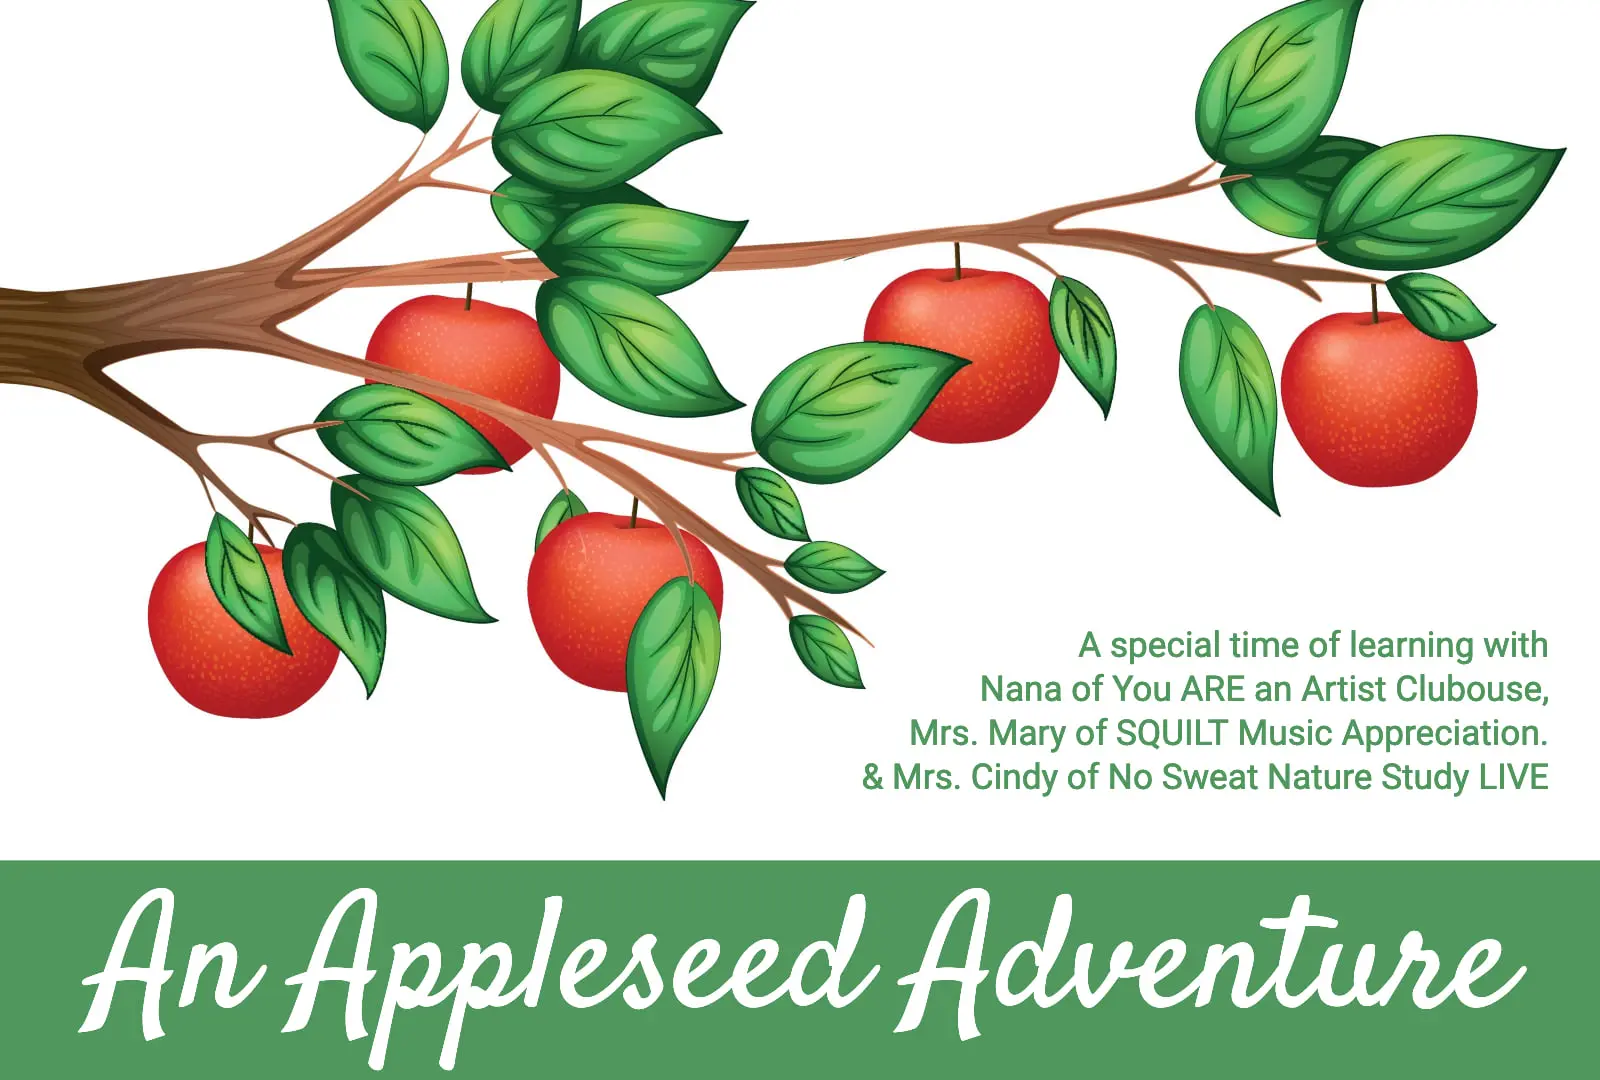 Johnny Appleseed Adventure